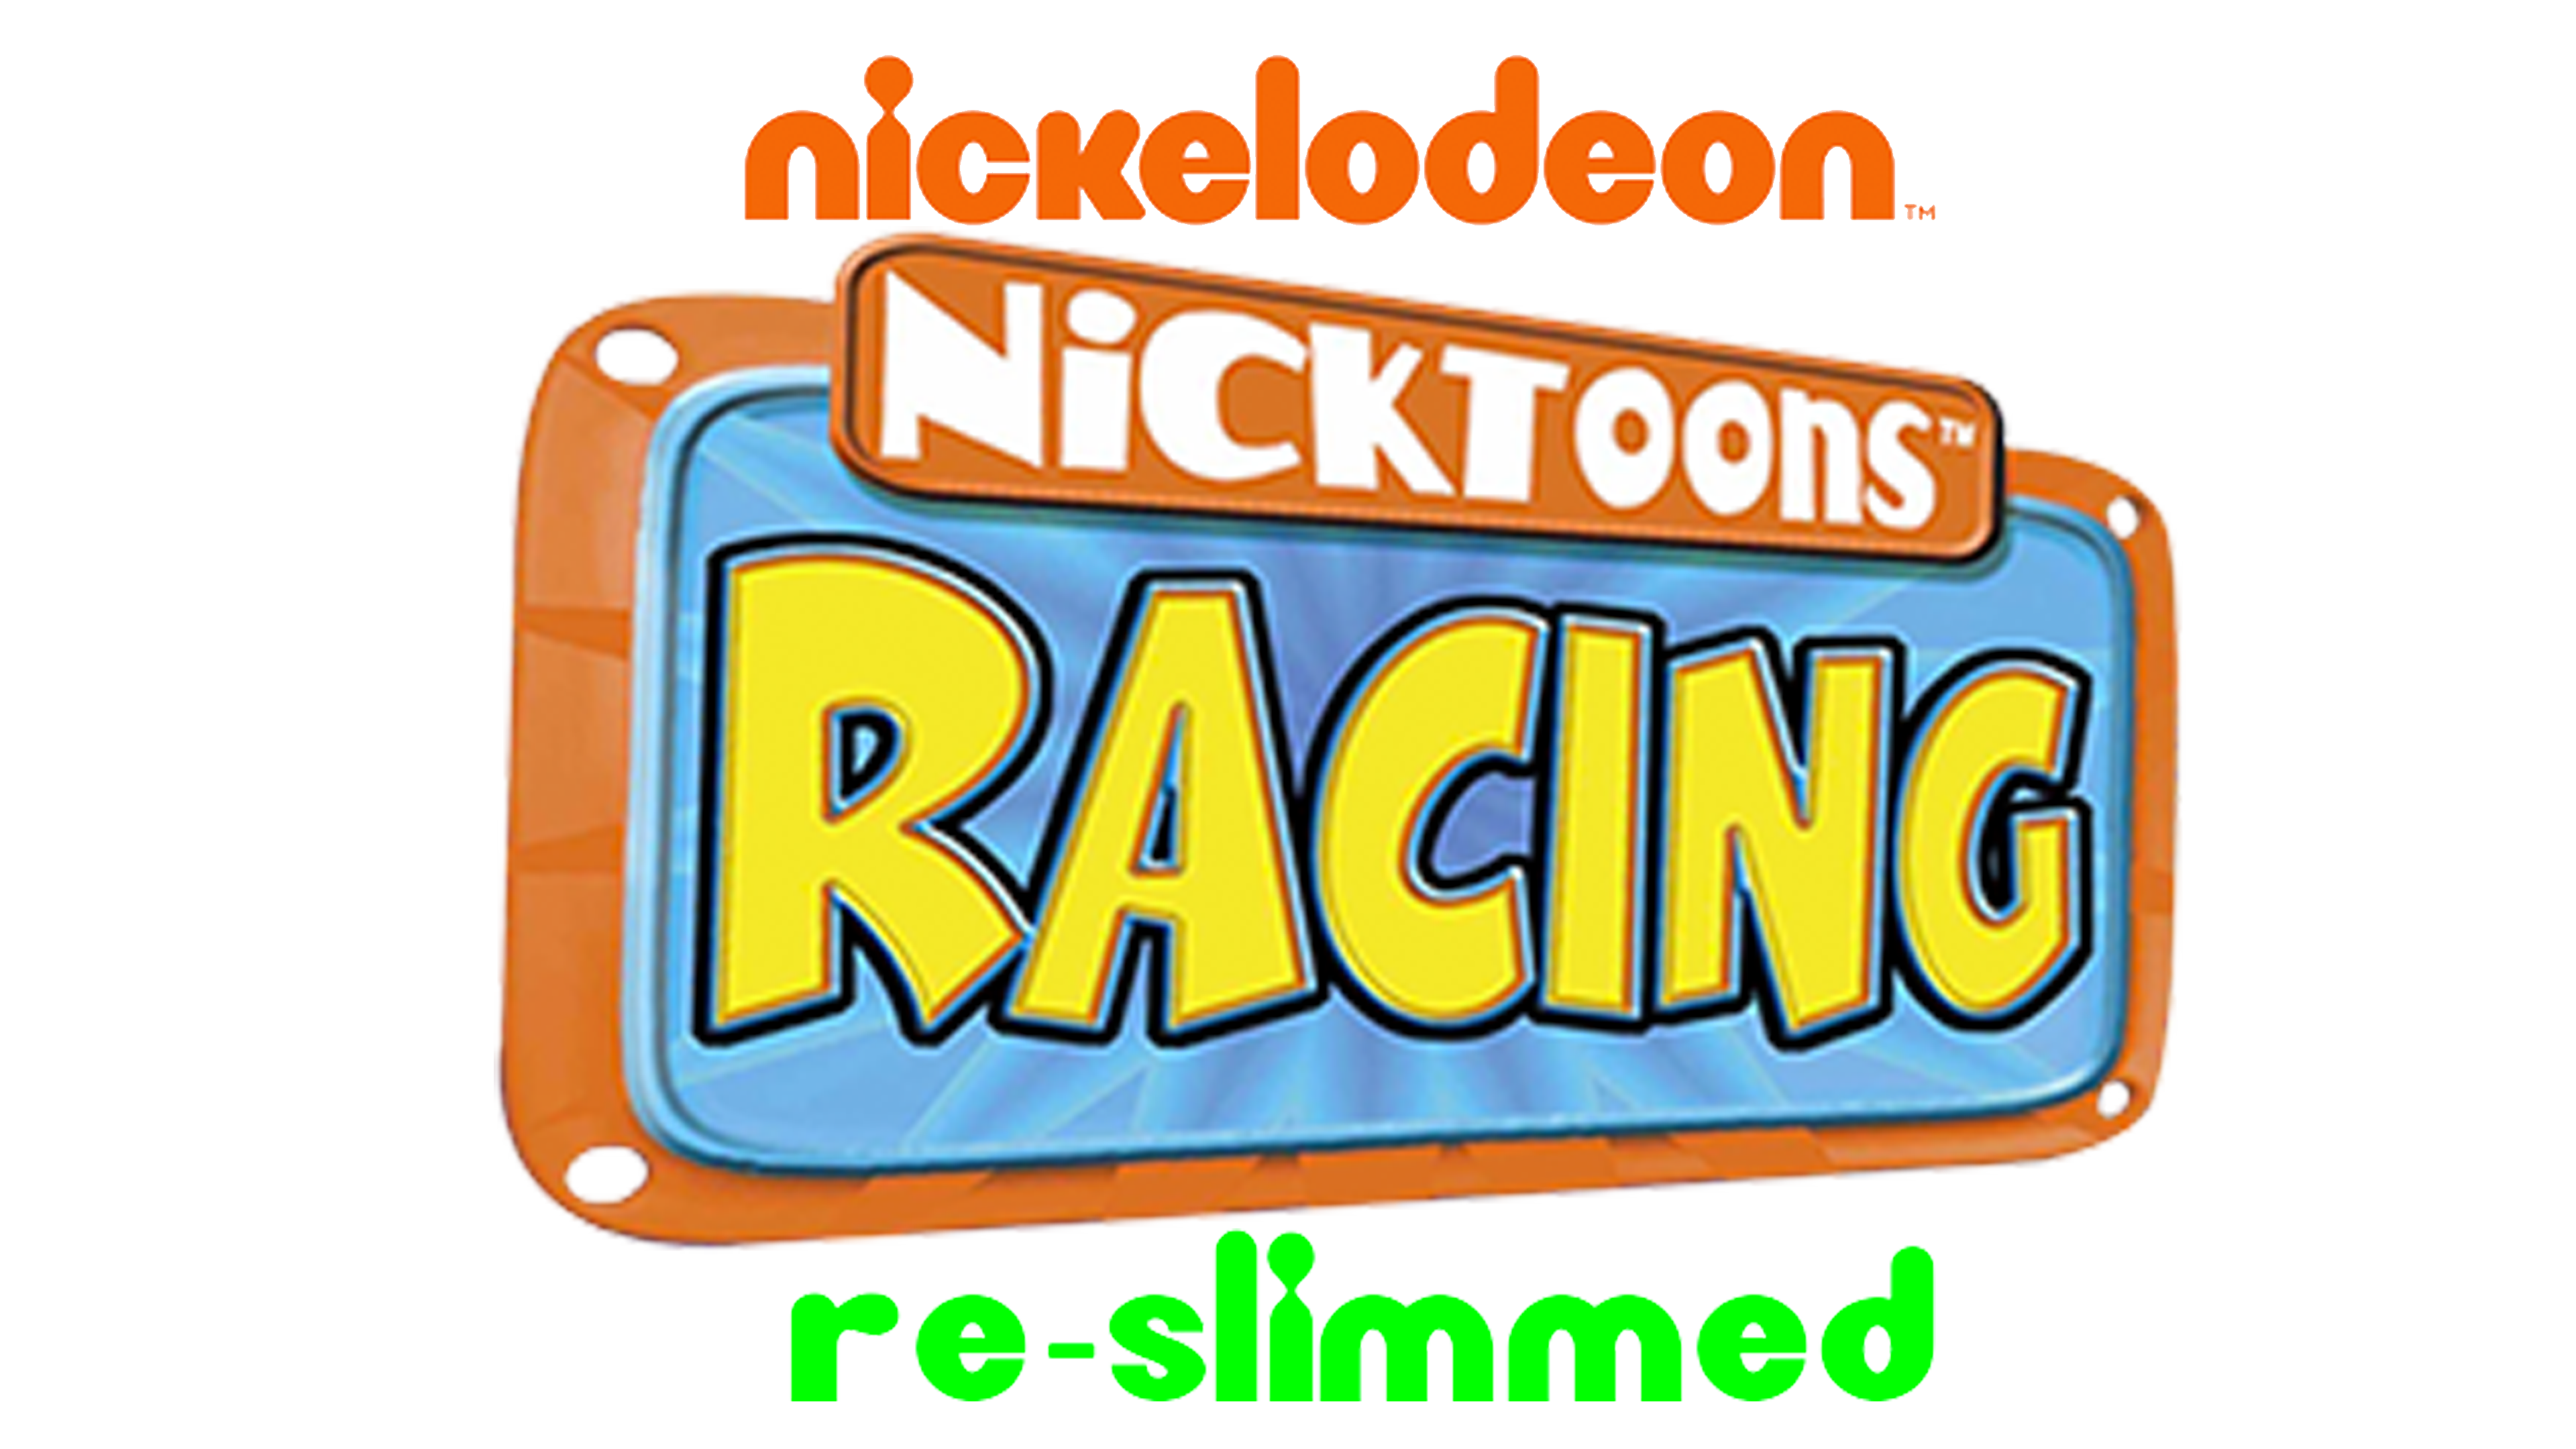 nicktoons racing game logo